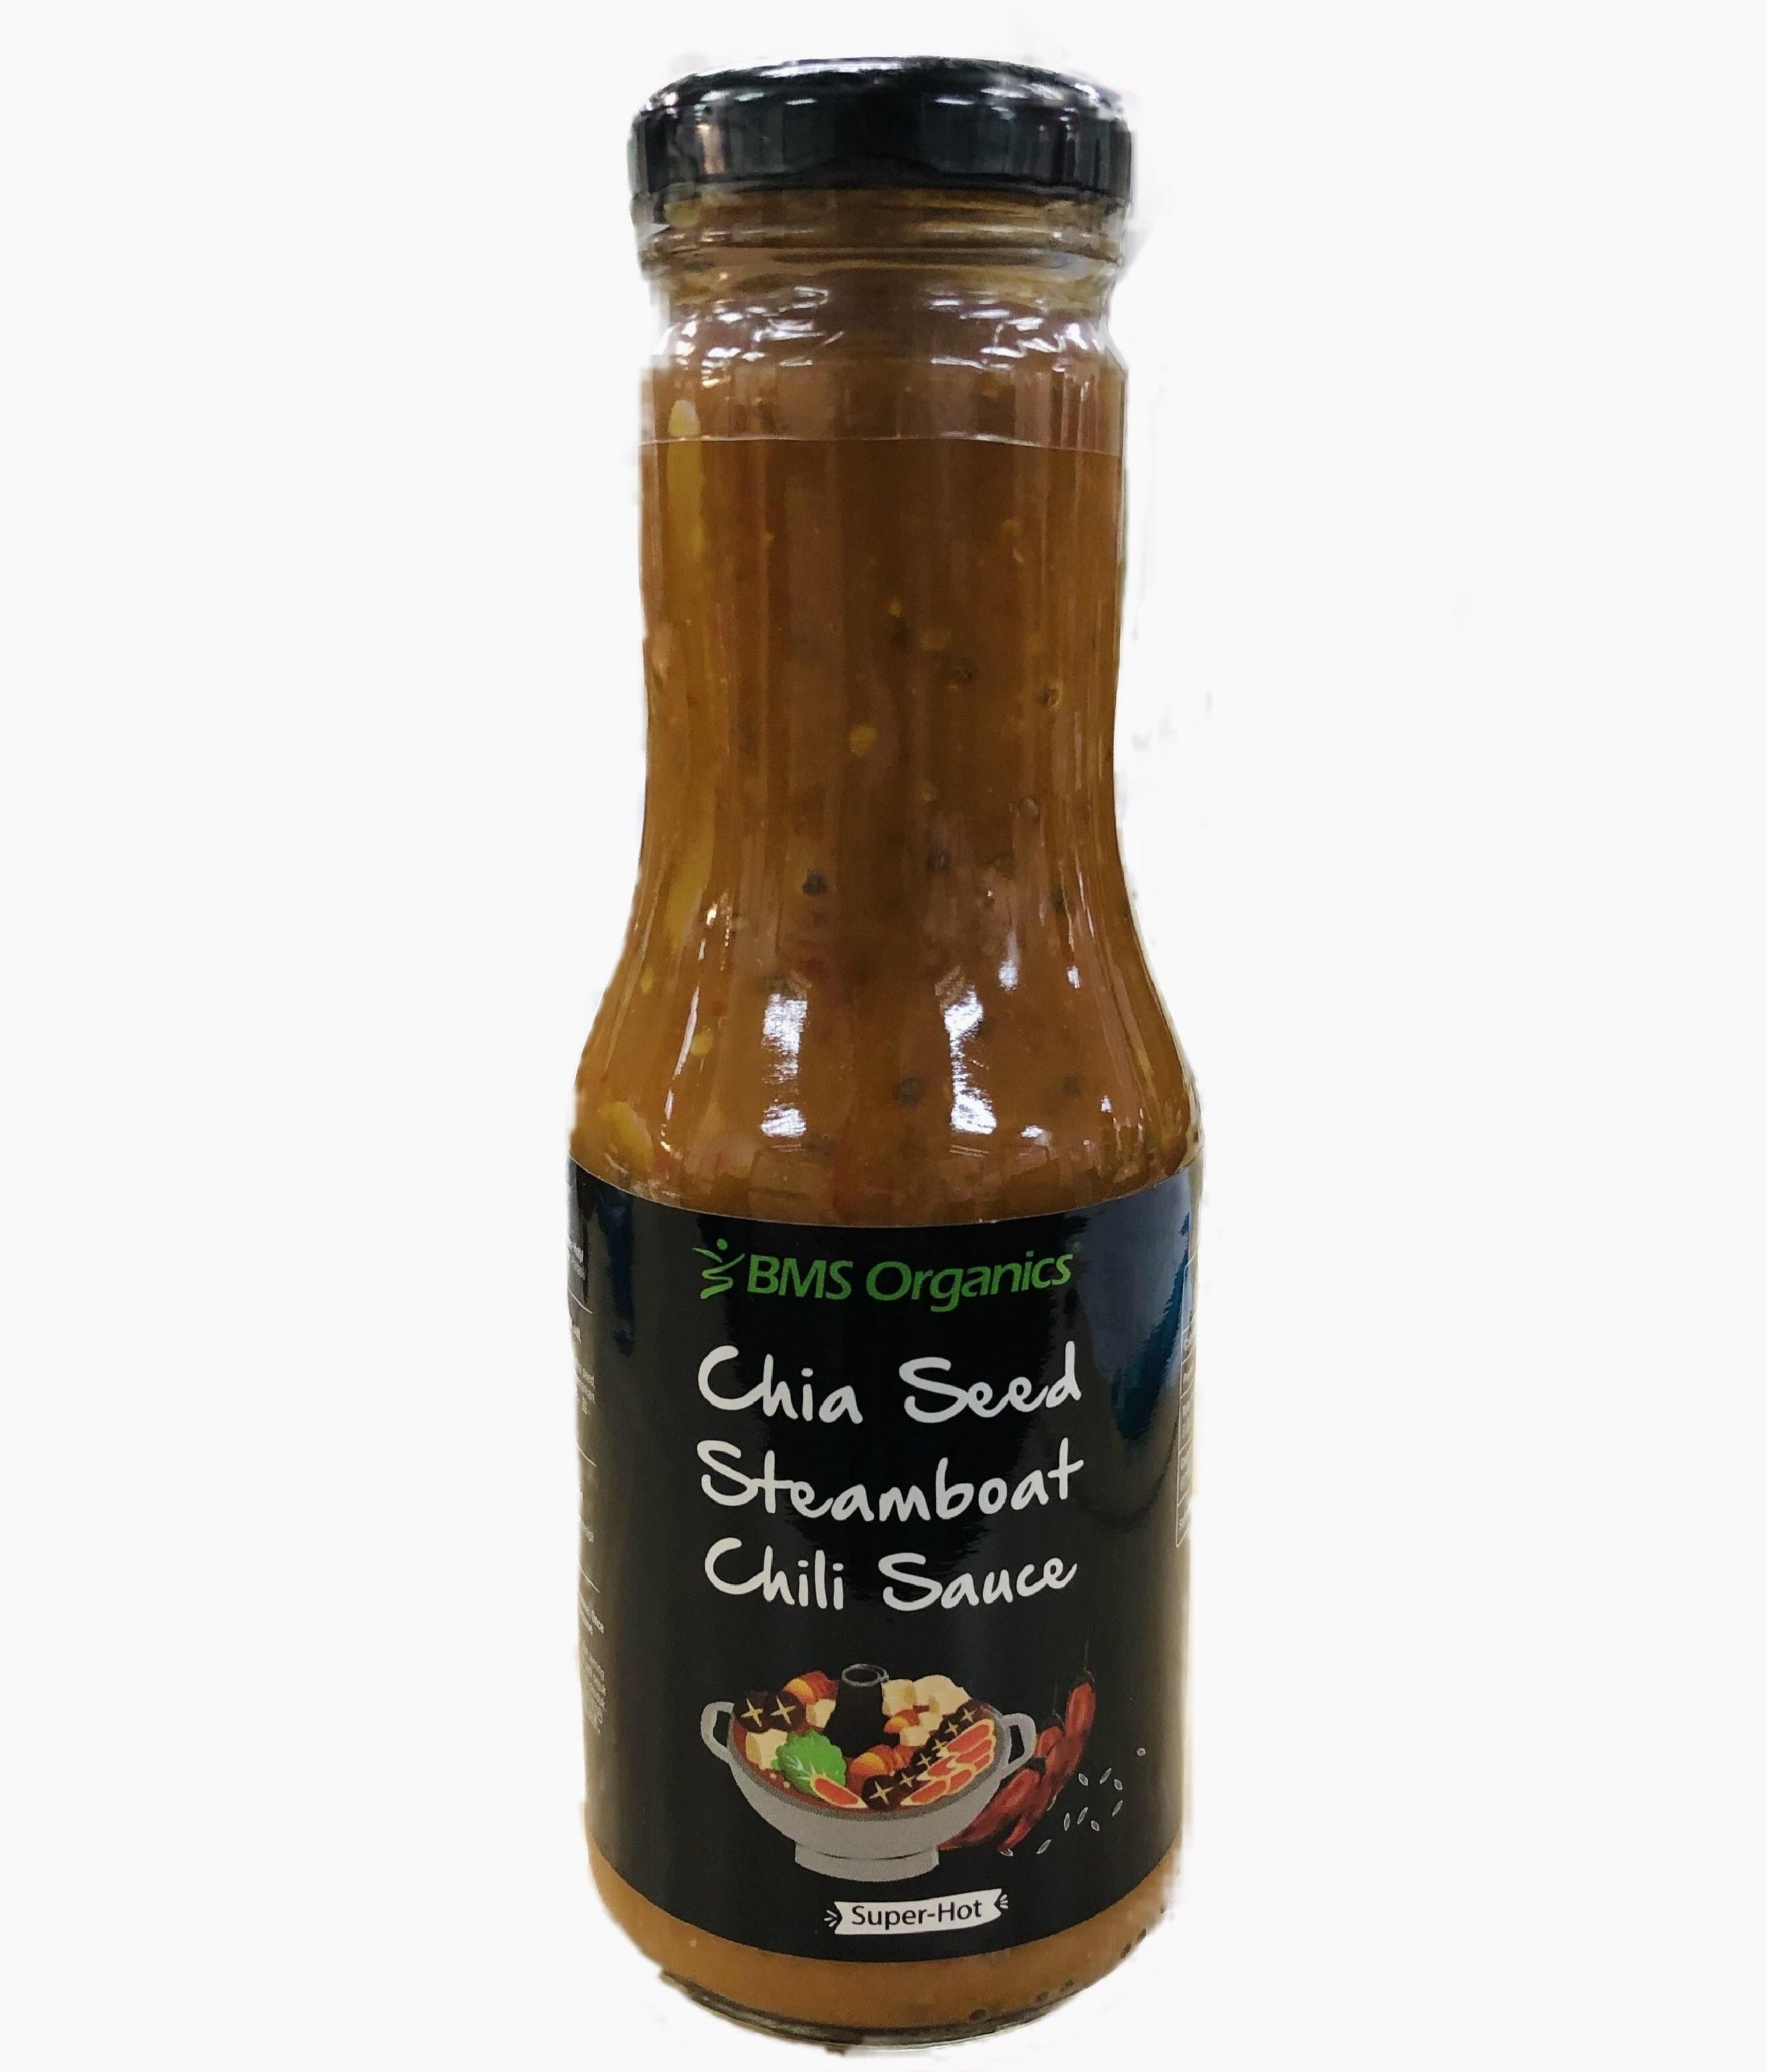 BMS Organics - Chia Seed Steamboat Chili Sauce / 奇亚籽火锅辣椒酱 (270g) (Super hot)